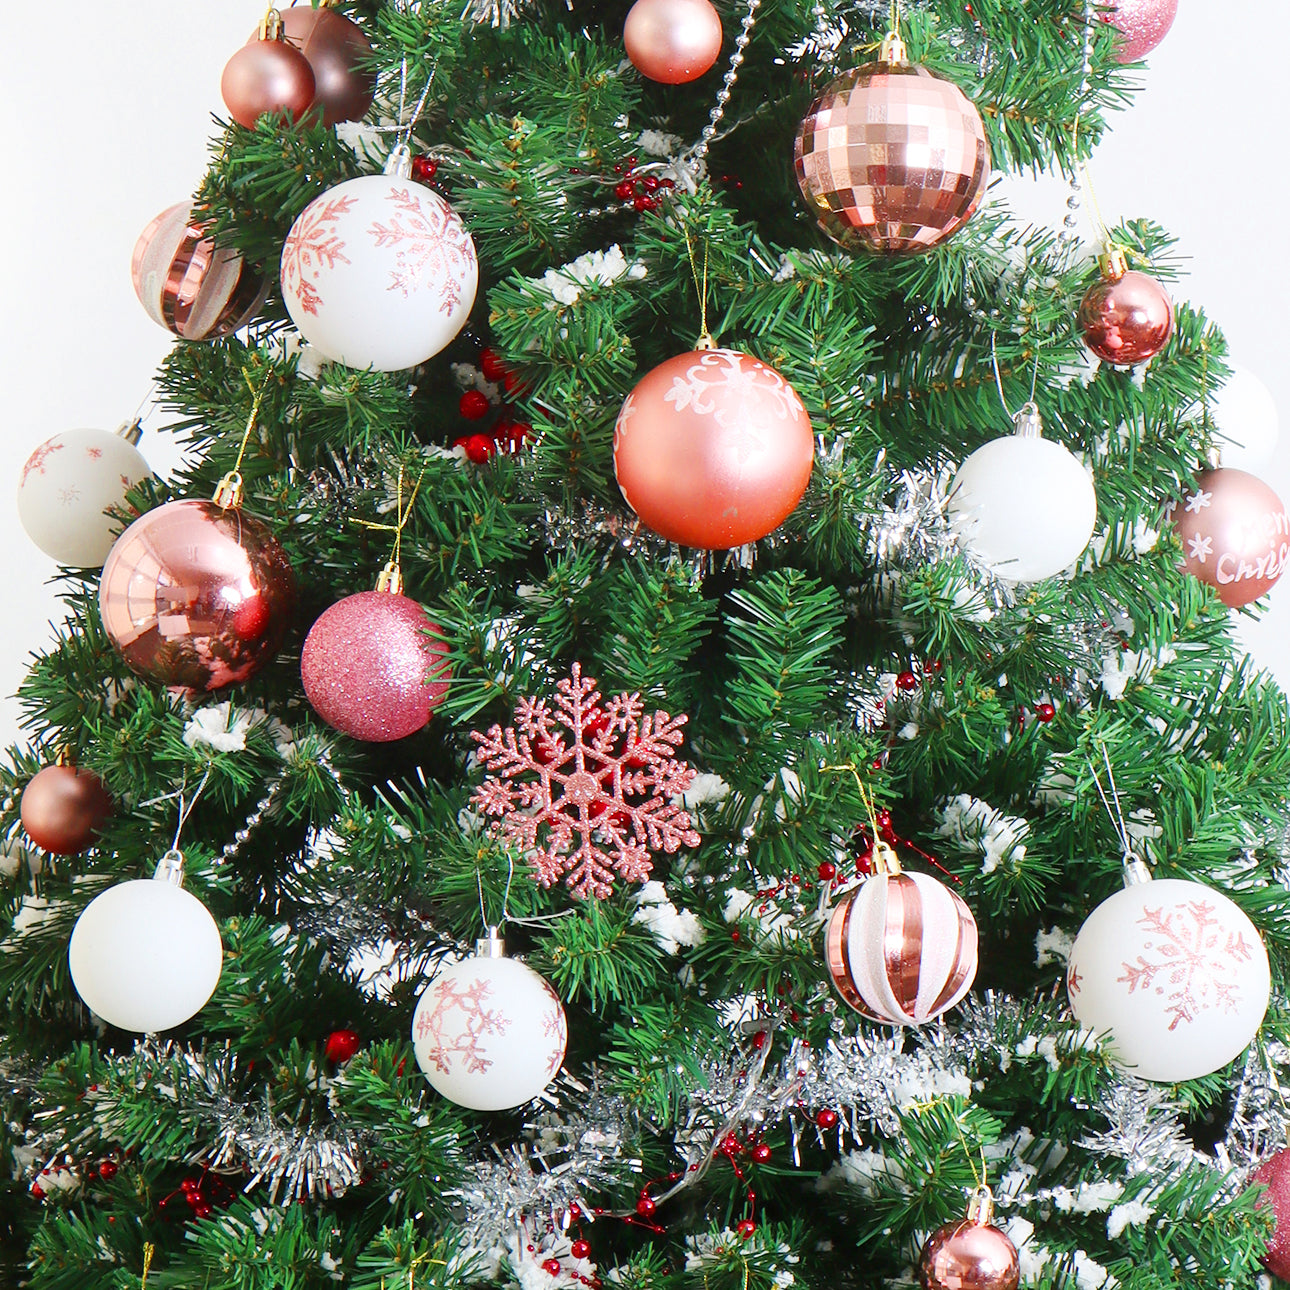 50 Pcs Rosegold & White Christmas Ornaments